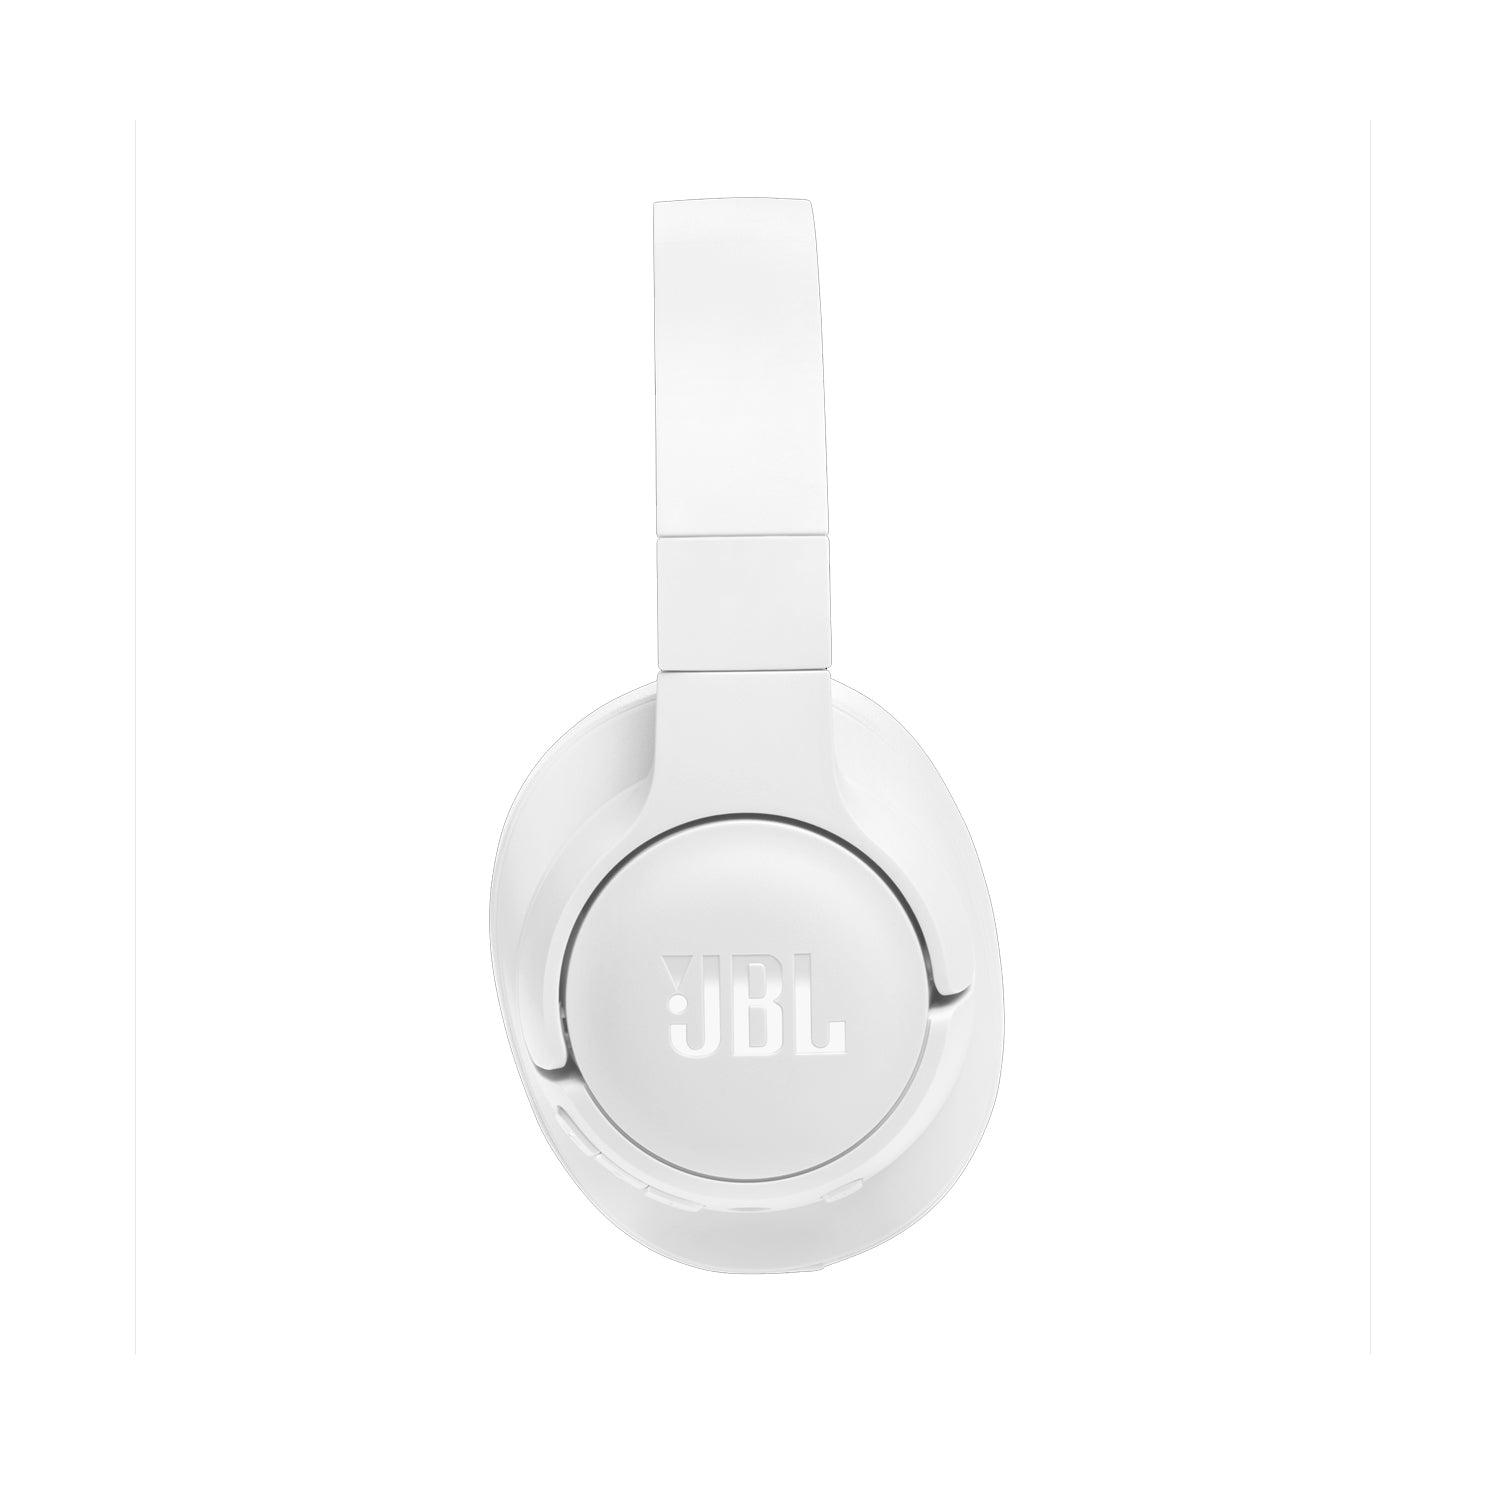 JBL 720BT Wireless Over-Ear Headphones